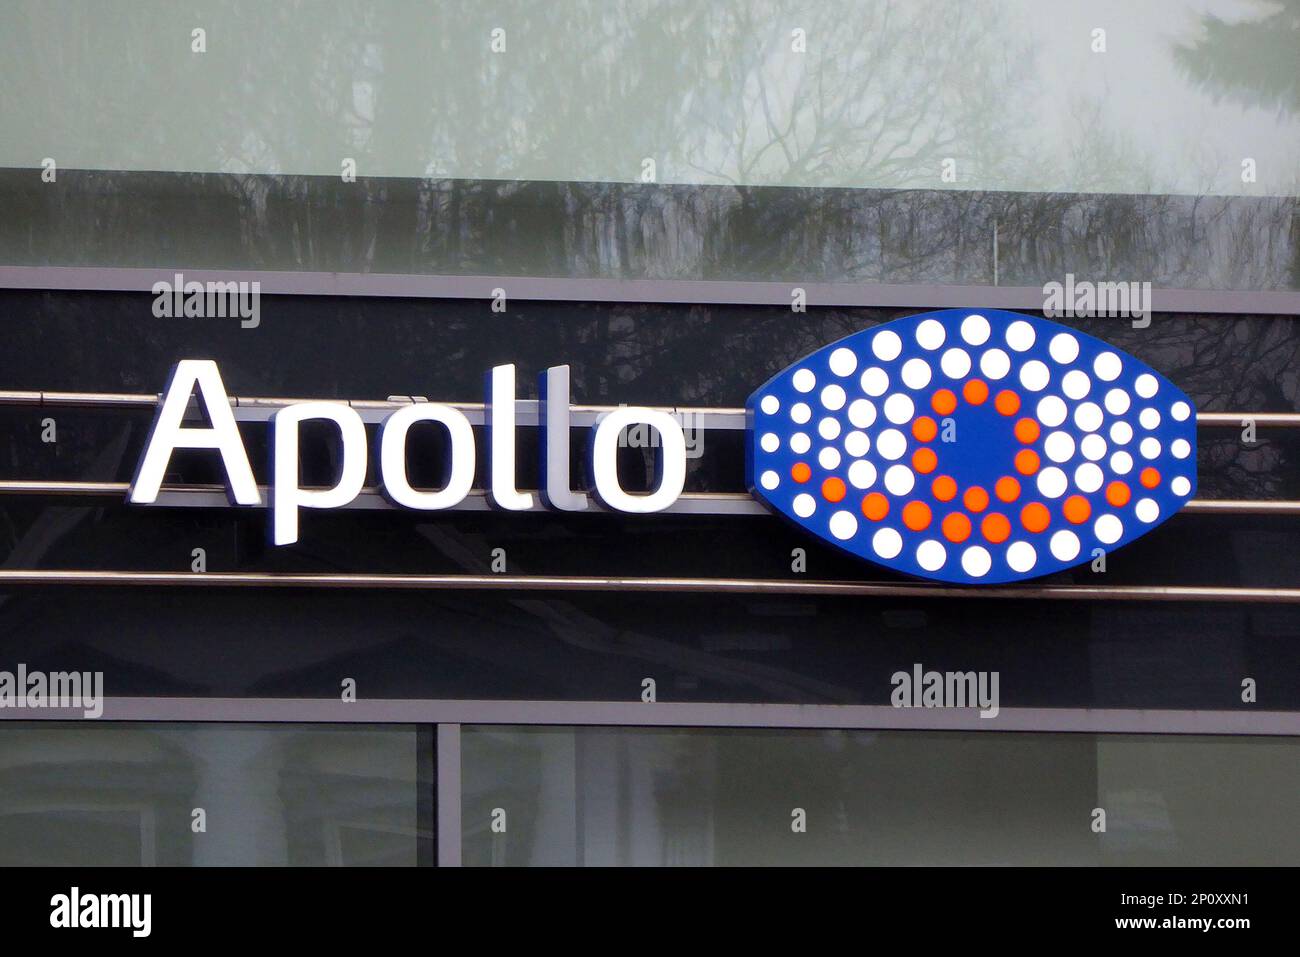 Apollo Optik Kette / Geschaeft / Augenoptik-Unternehmen / Laden / Logo / Symbol Stock Photo